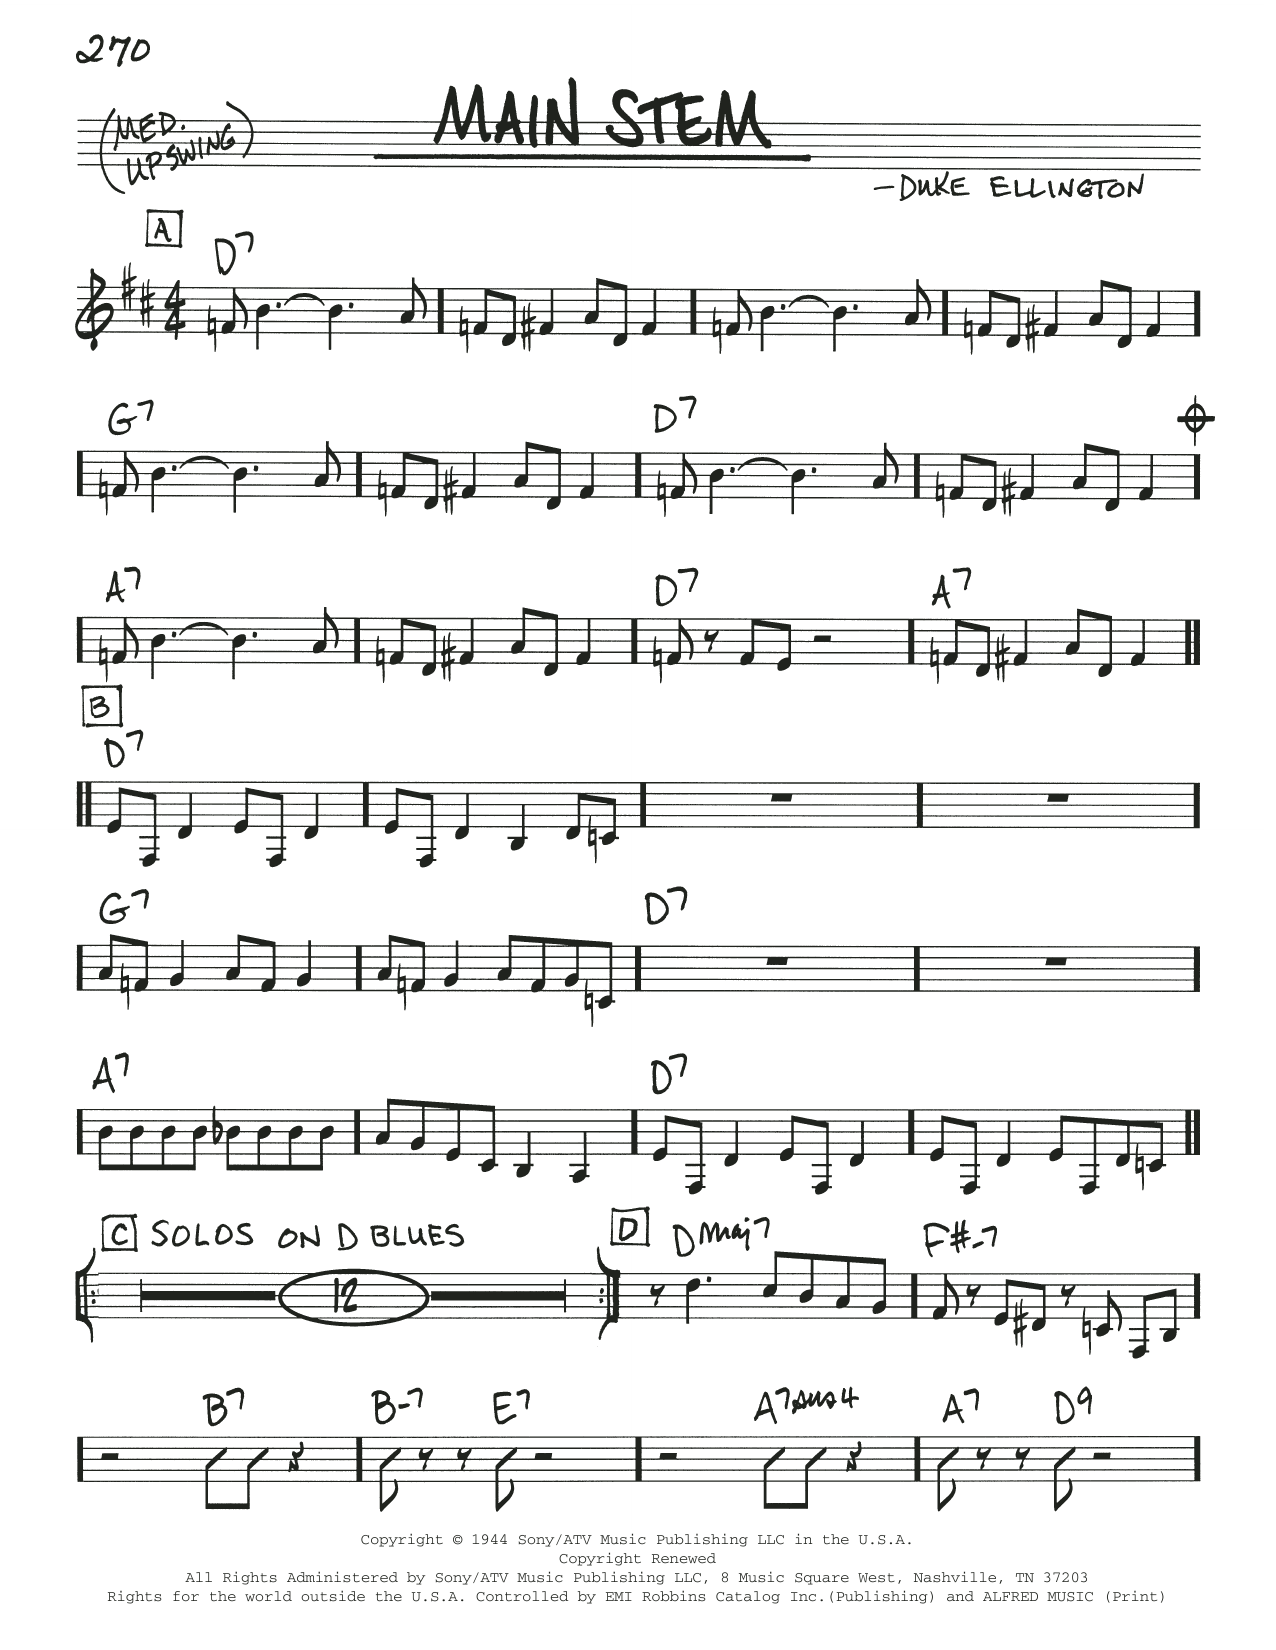 Download Duke Ellington Main Stem Sheet Music